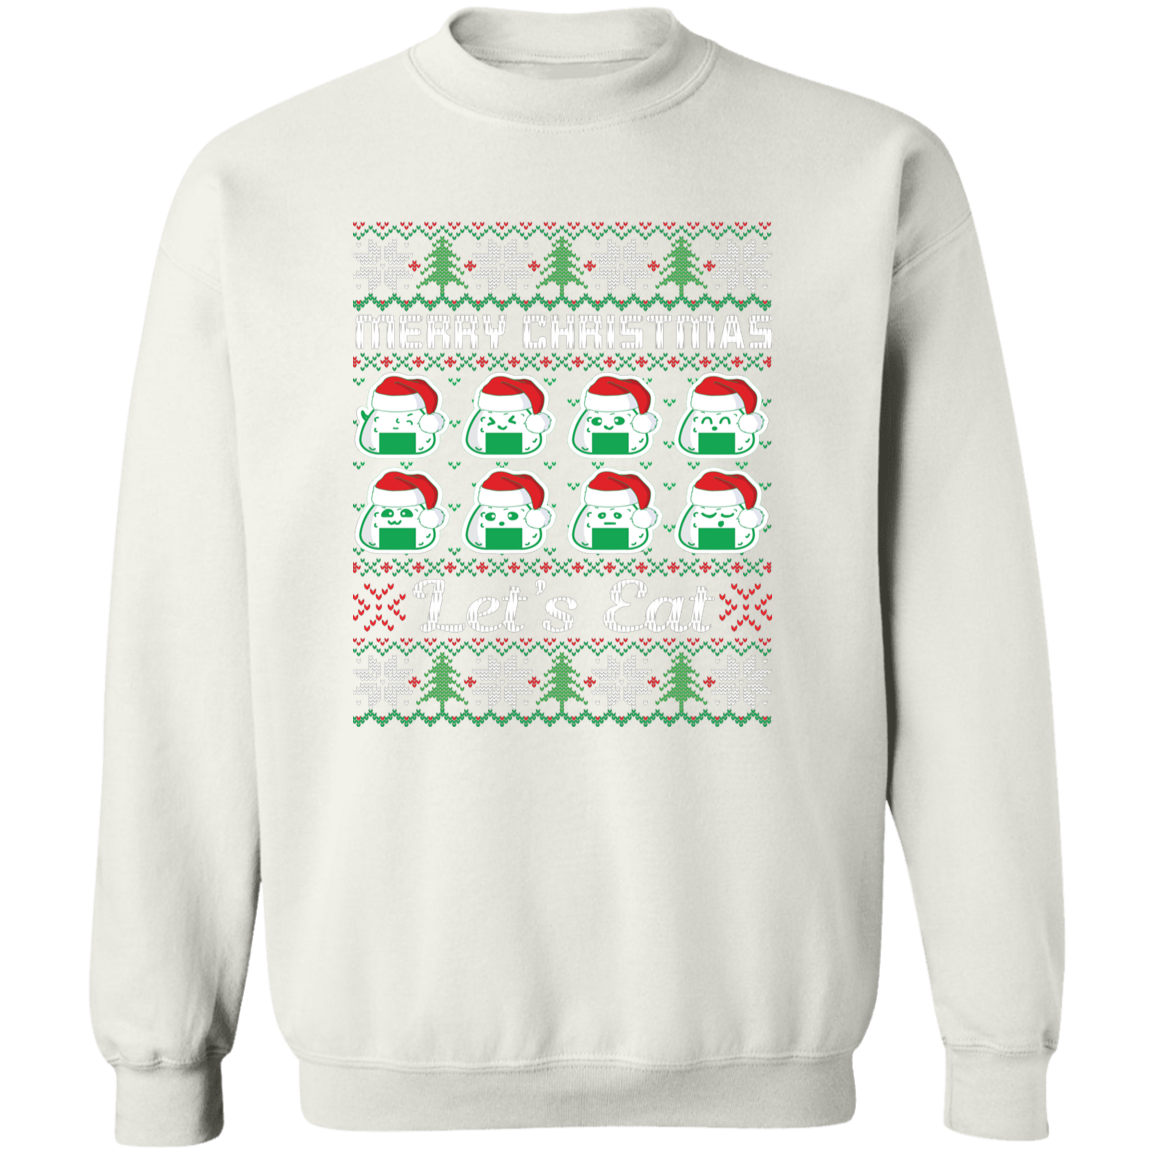 Merry Christmas Let's Eat Sweatshirt